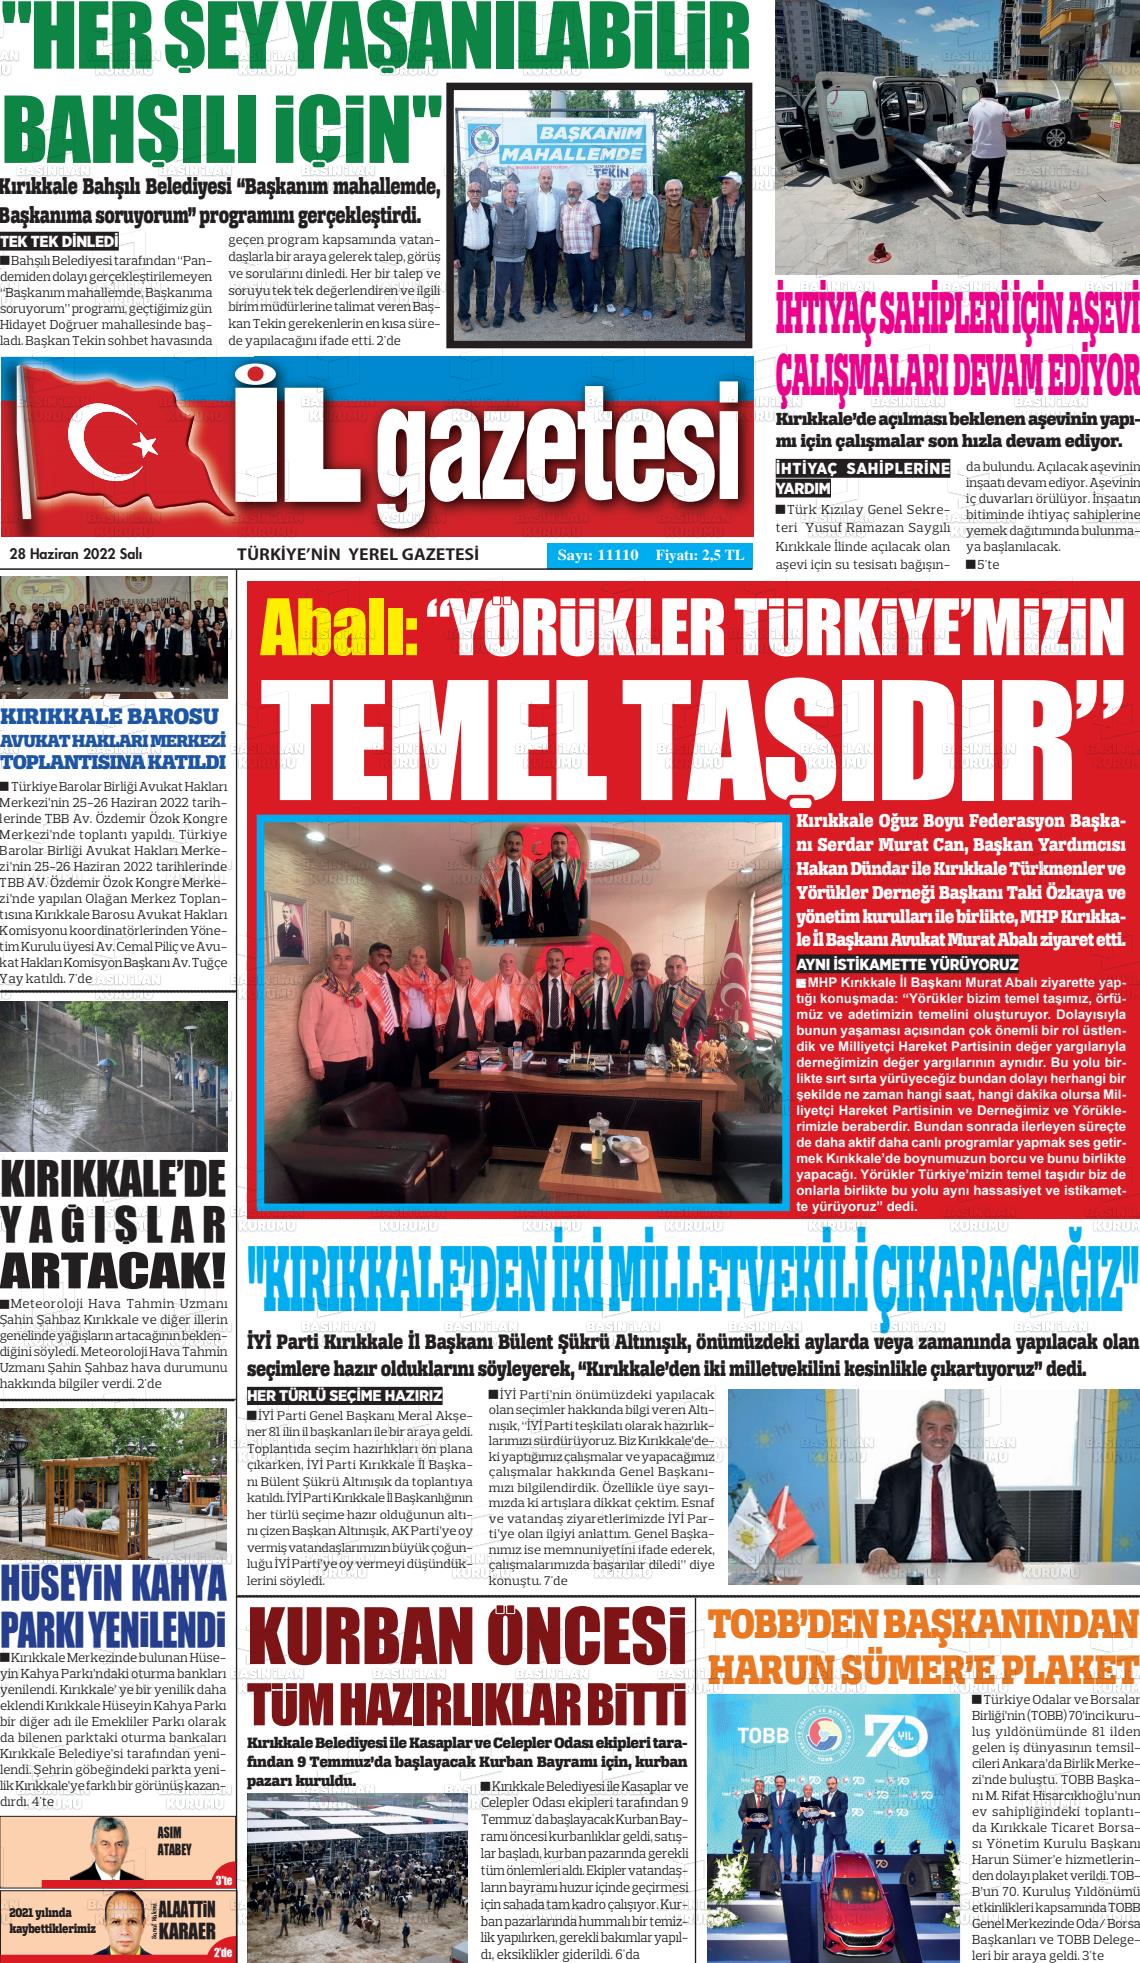 28 Haziran 2022 Kırıkkale İl Gazete Manşeti